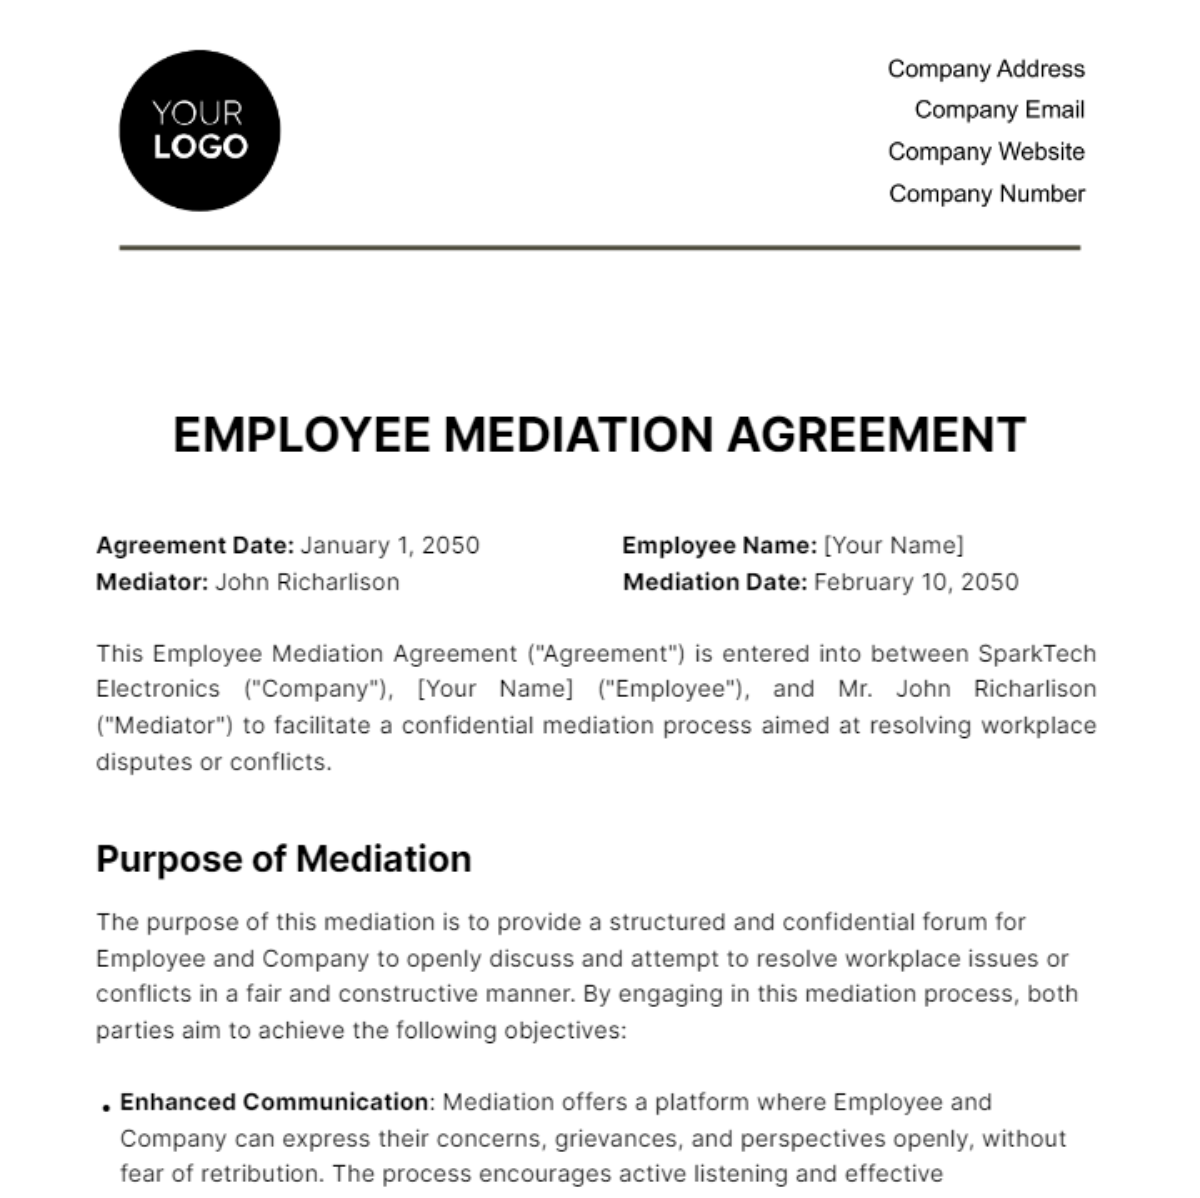 Employee Mediation Agreement HR Template